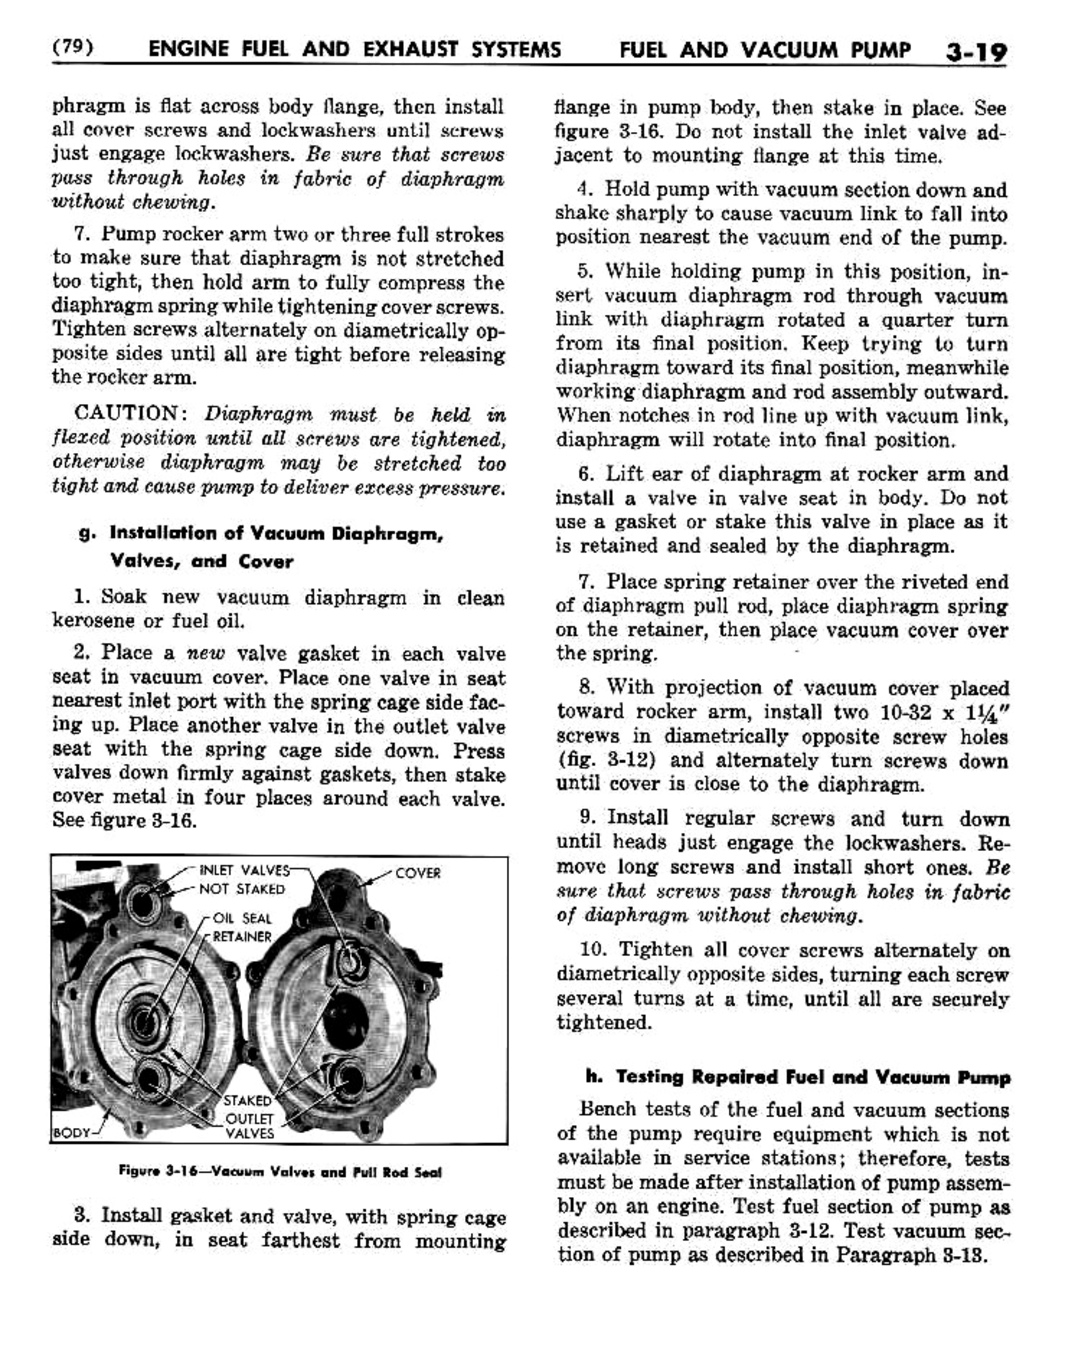 n_04 1956 Buick Shop Manual - Engine Fuel & Exhaust-019-019.jpg